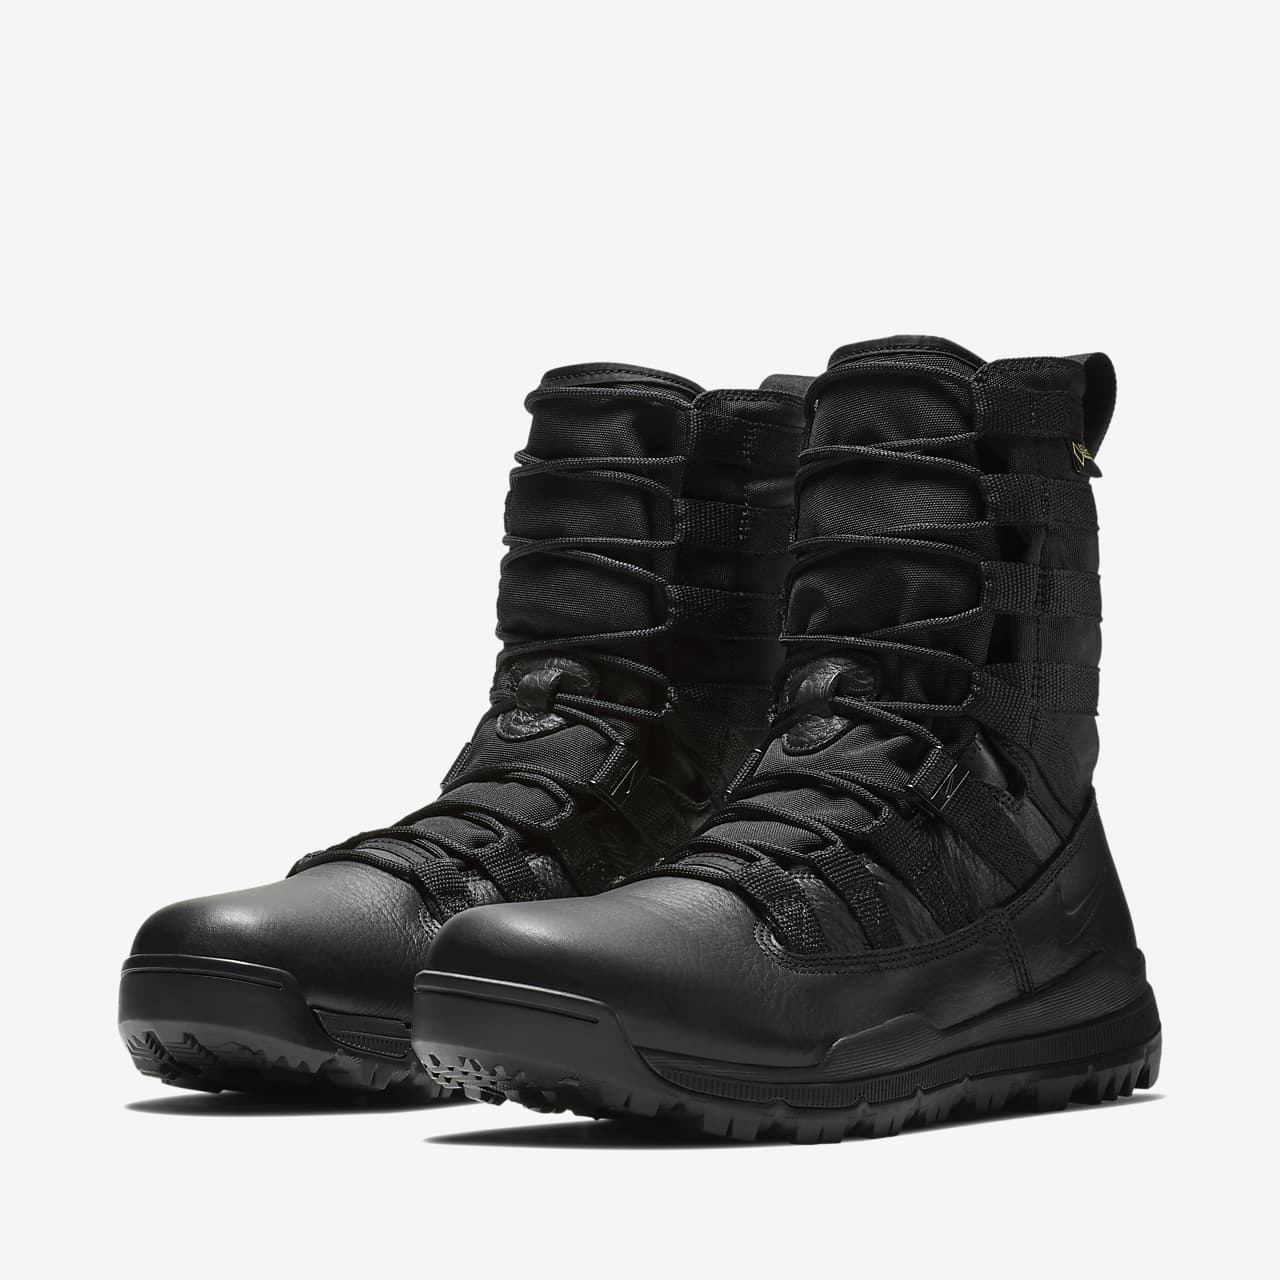 nike free military boots